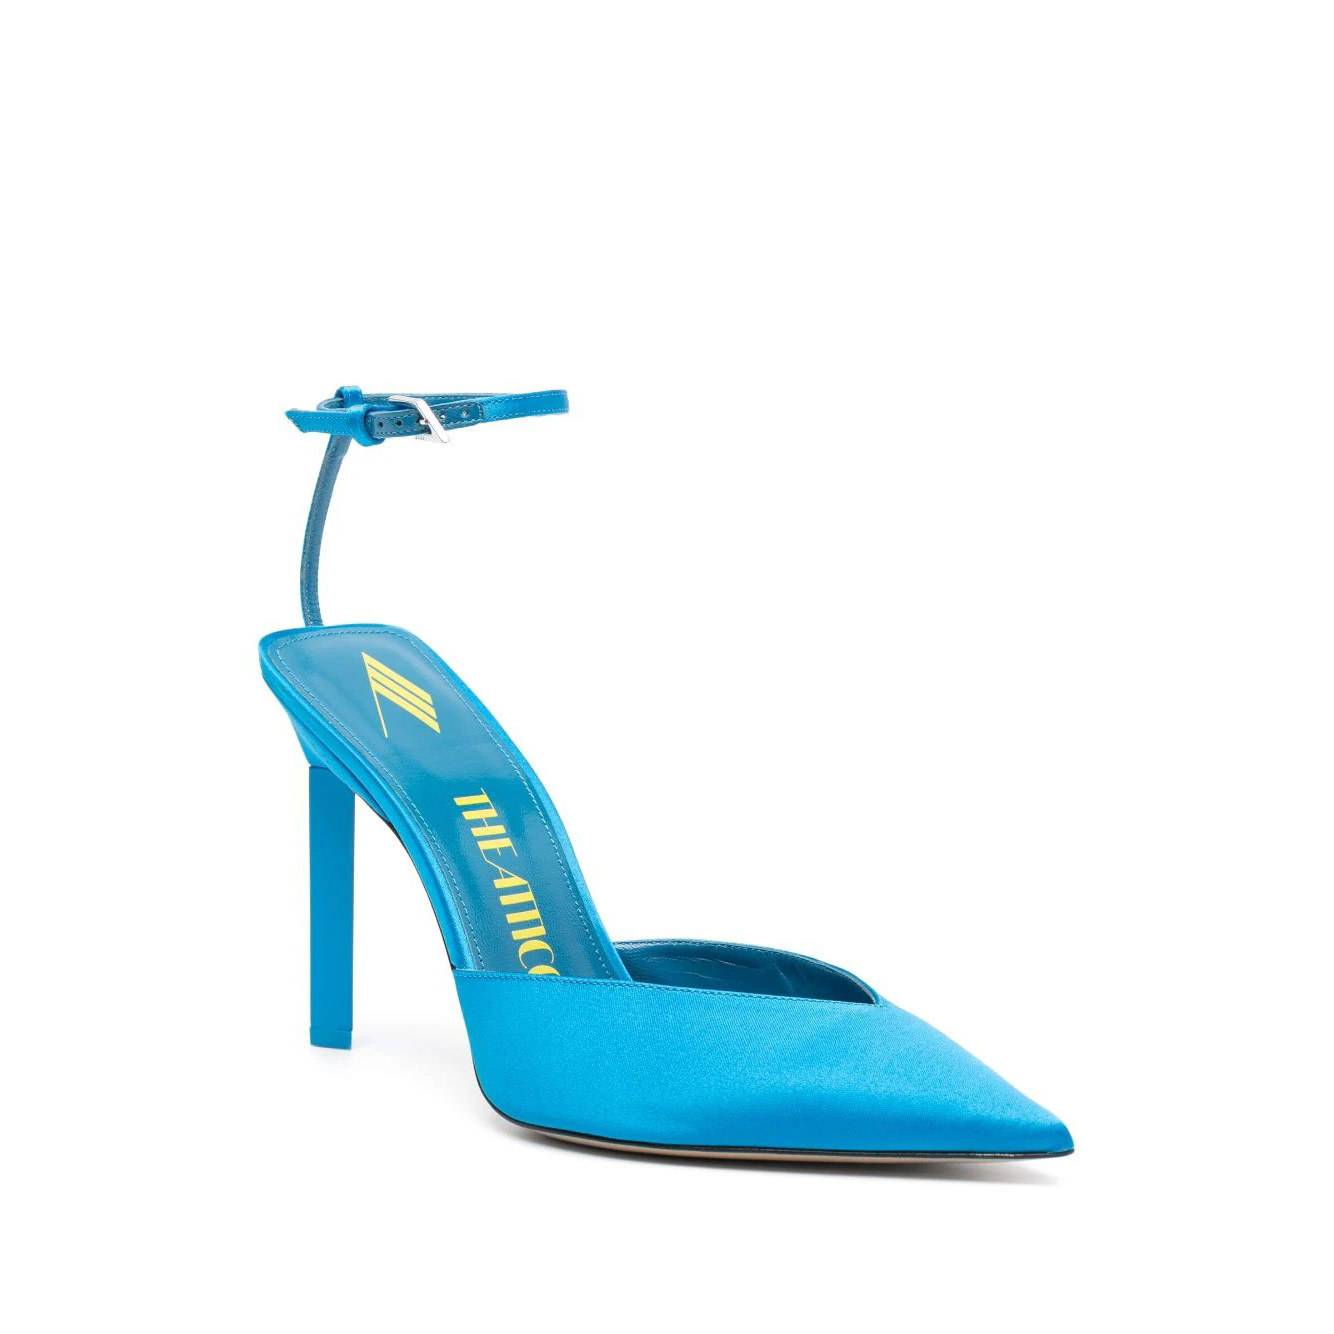 Turquoise high heels shoes stock photo. Image of shiny - 115231330